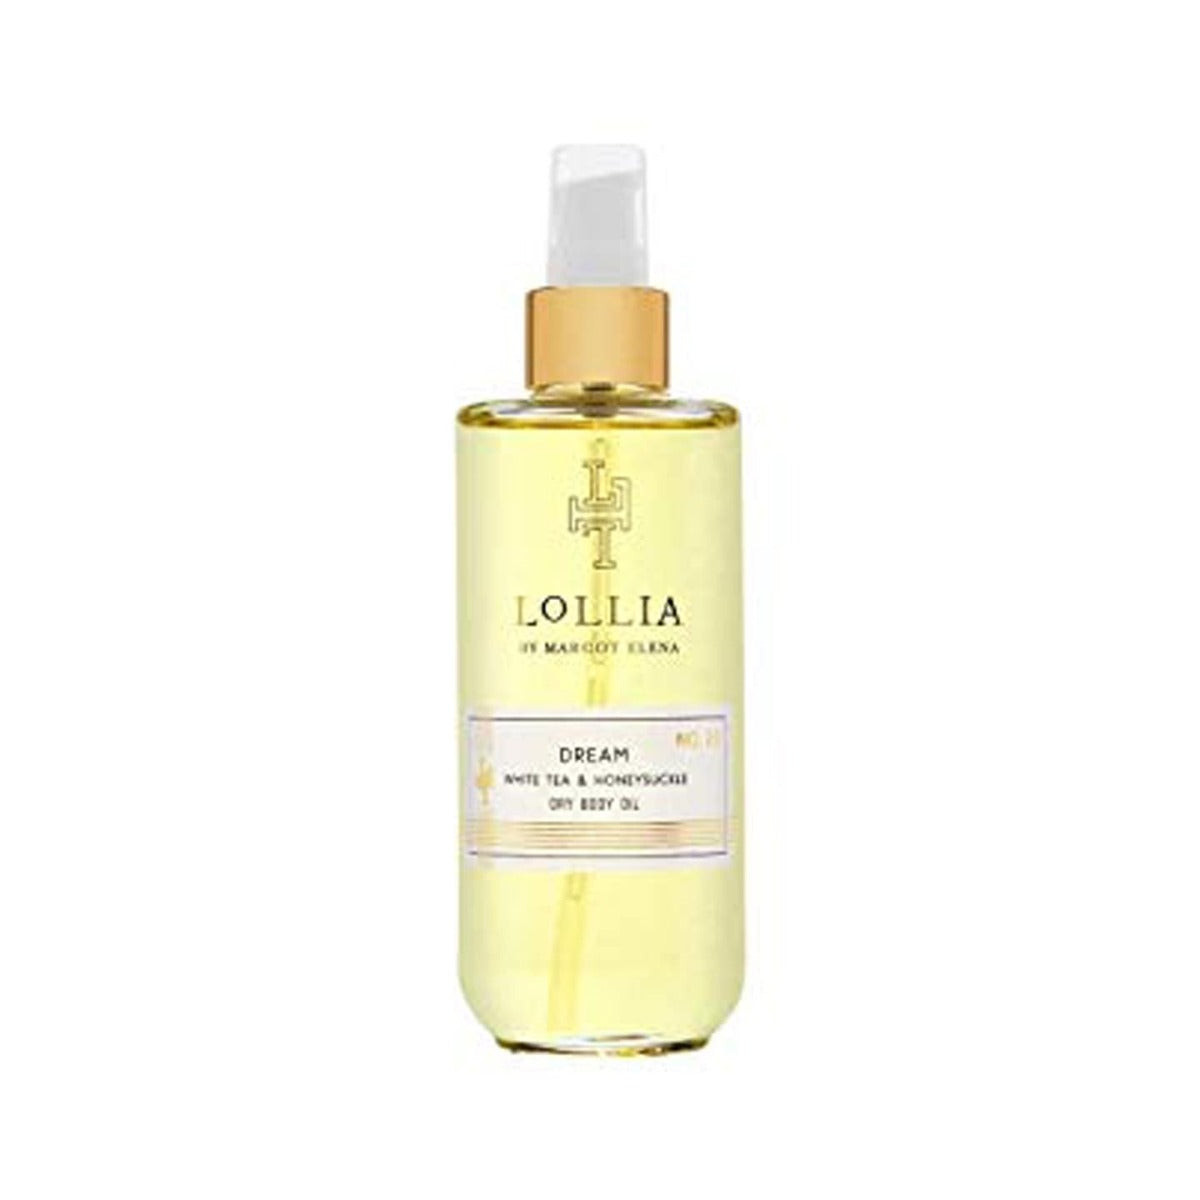 Lollia - Dry Body Oil - Dream